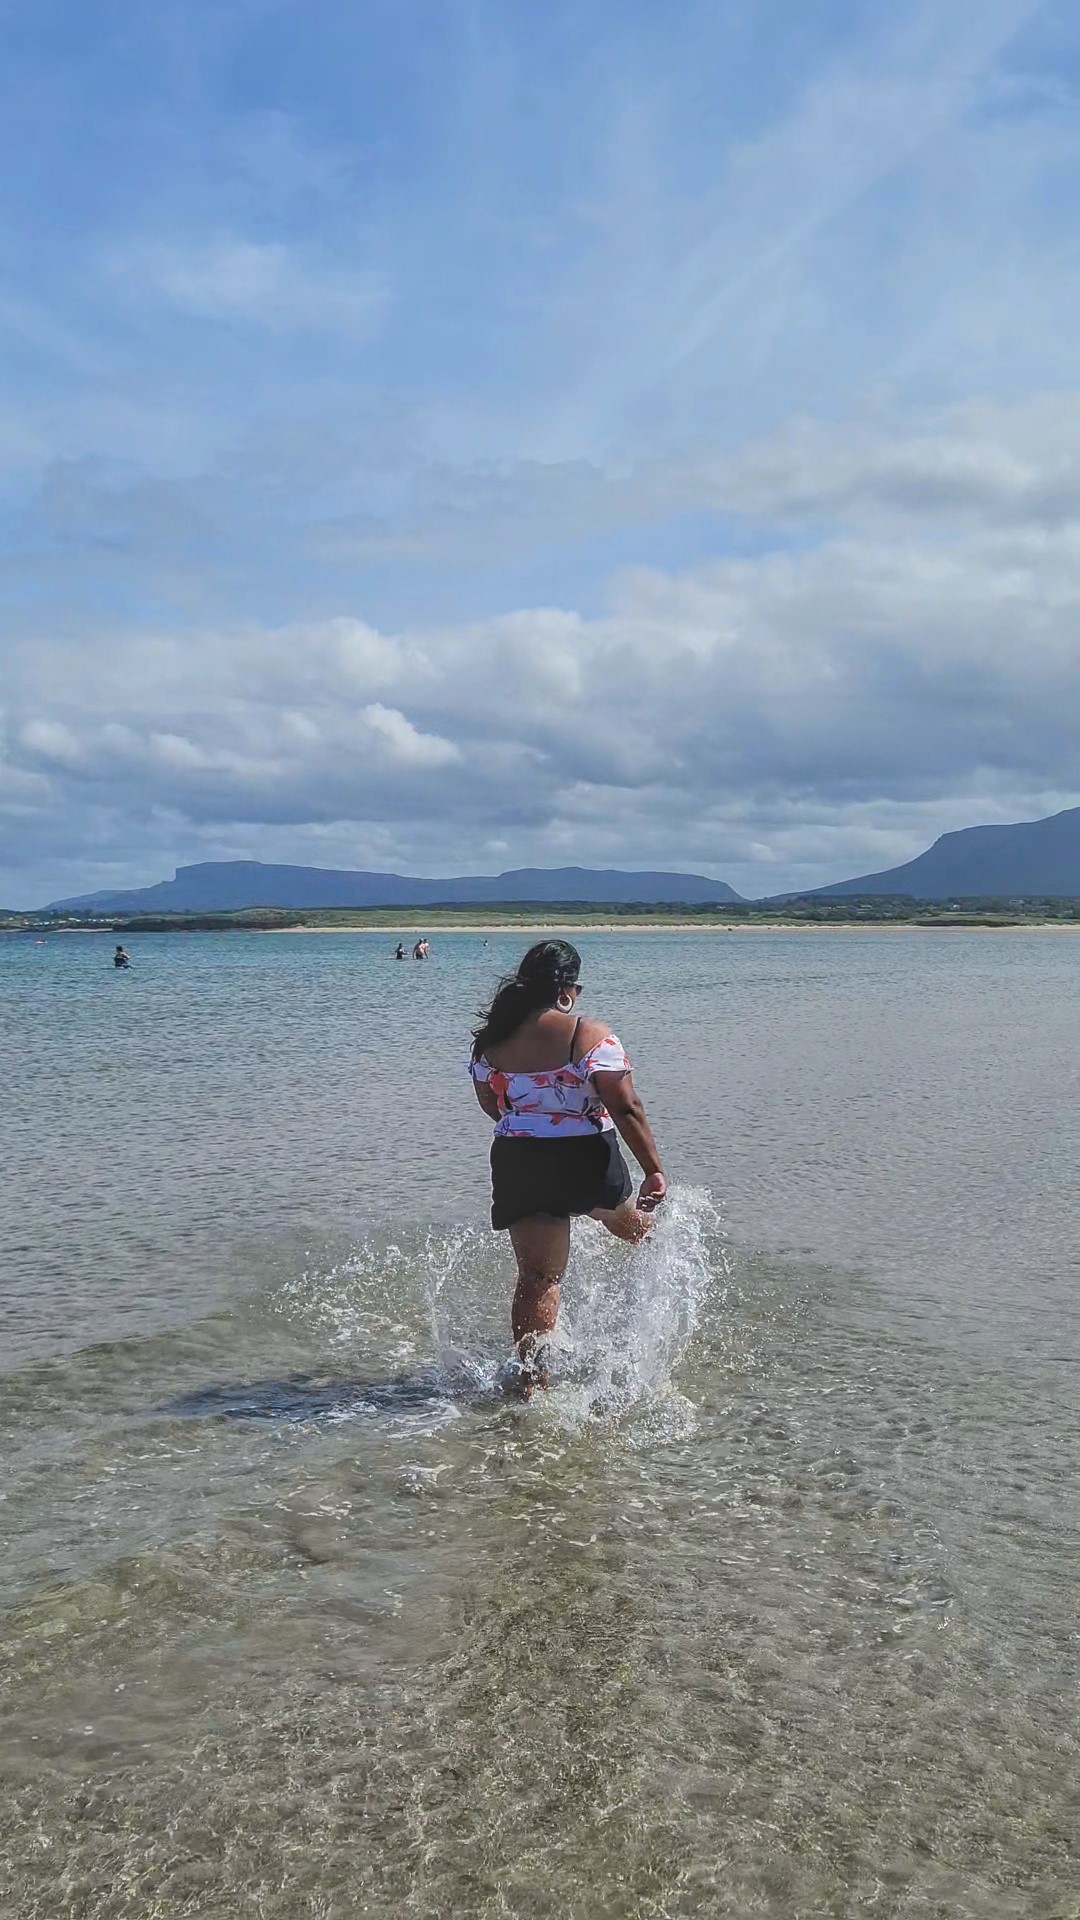 yashy splashing at a beach in Ireland